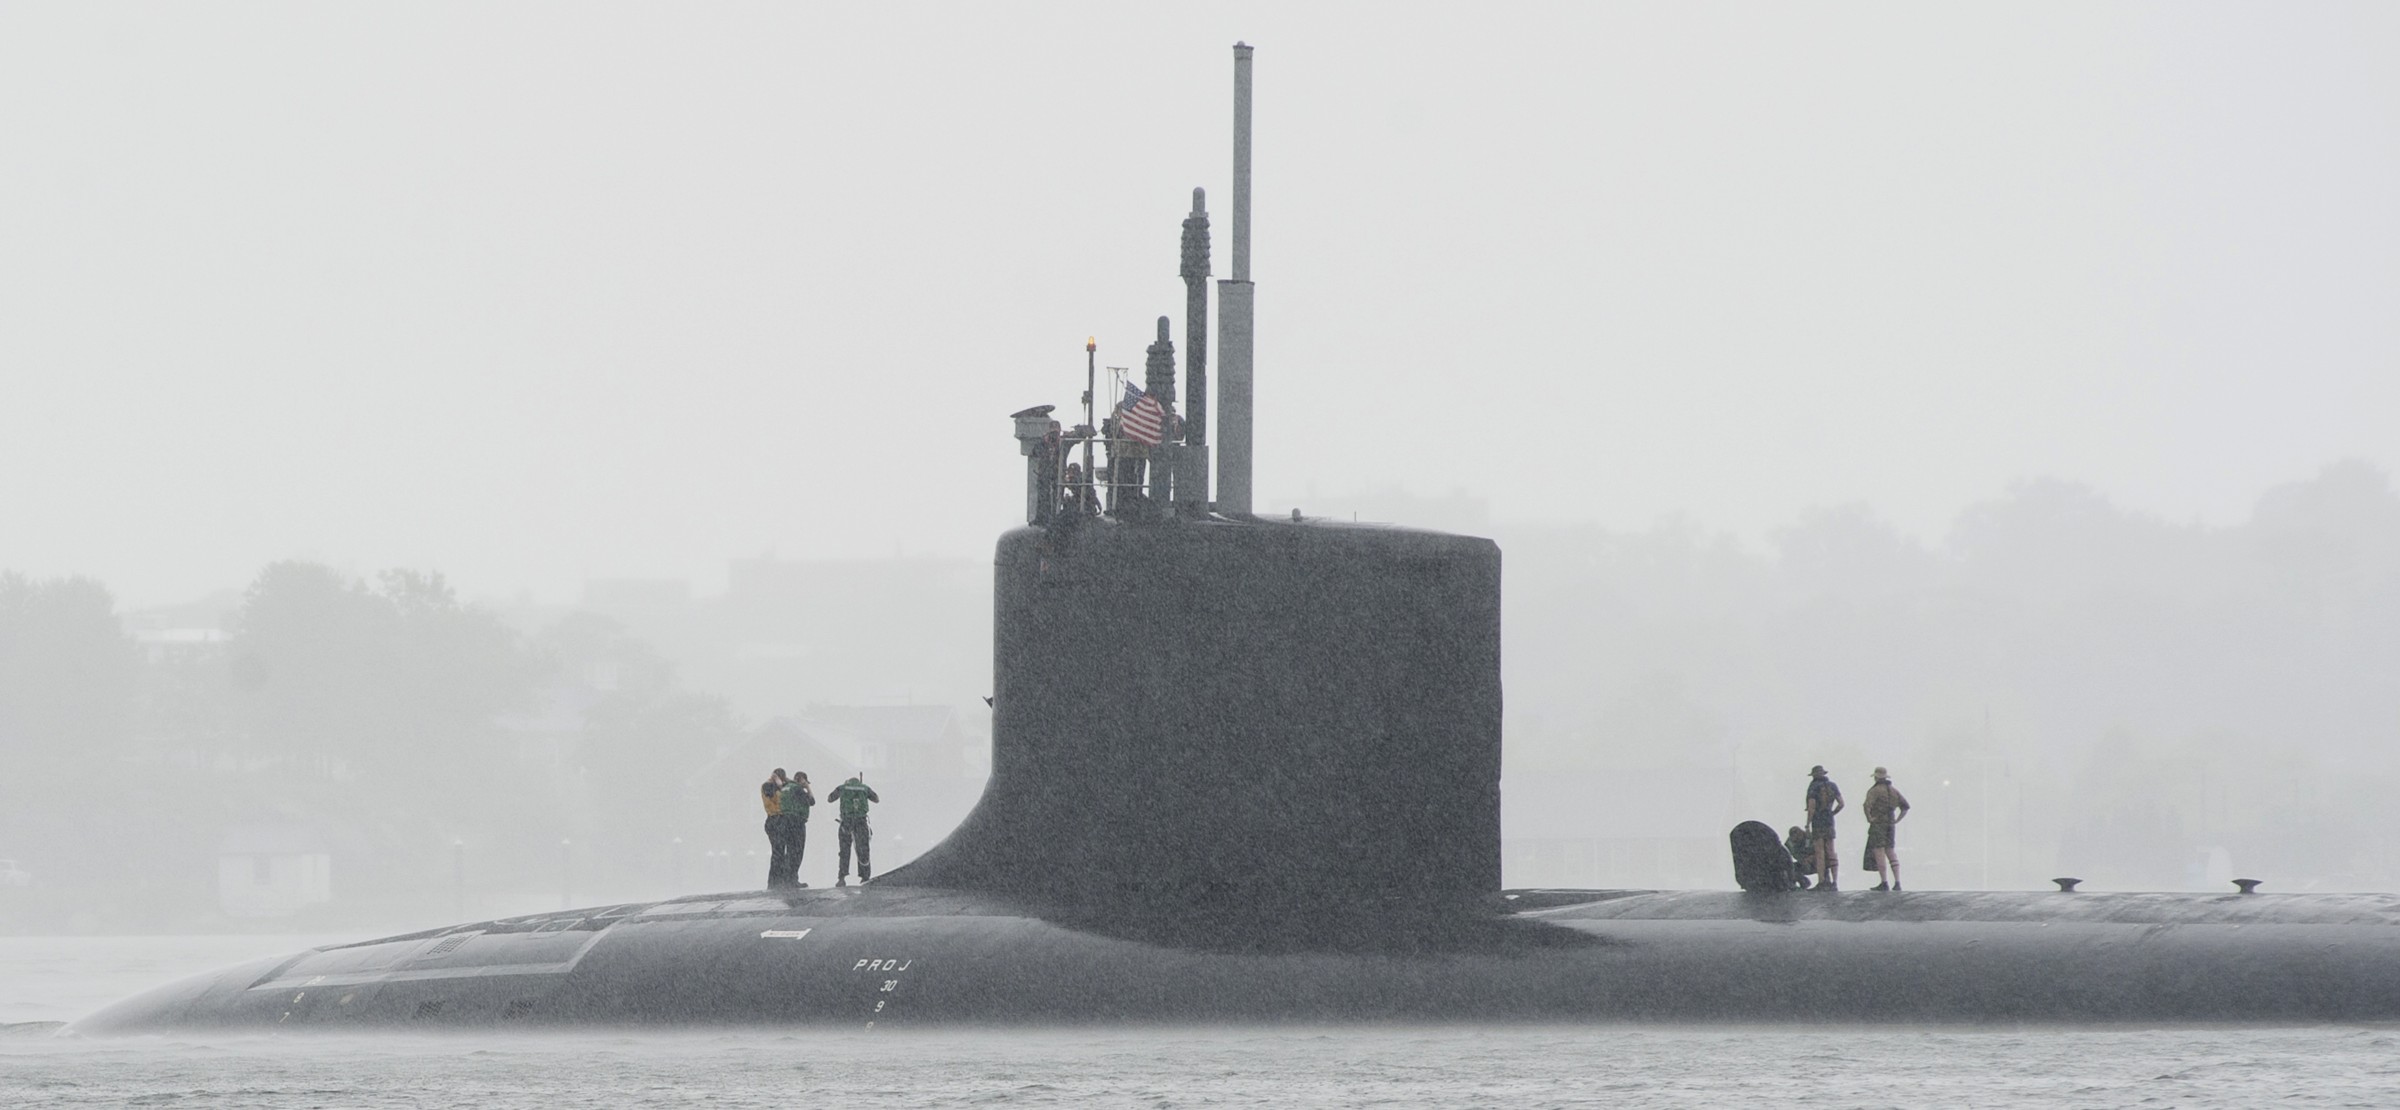 ssn-793 uss oregon virginia class attack submarine block iv us navy departing groton 09